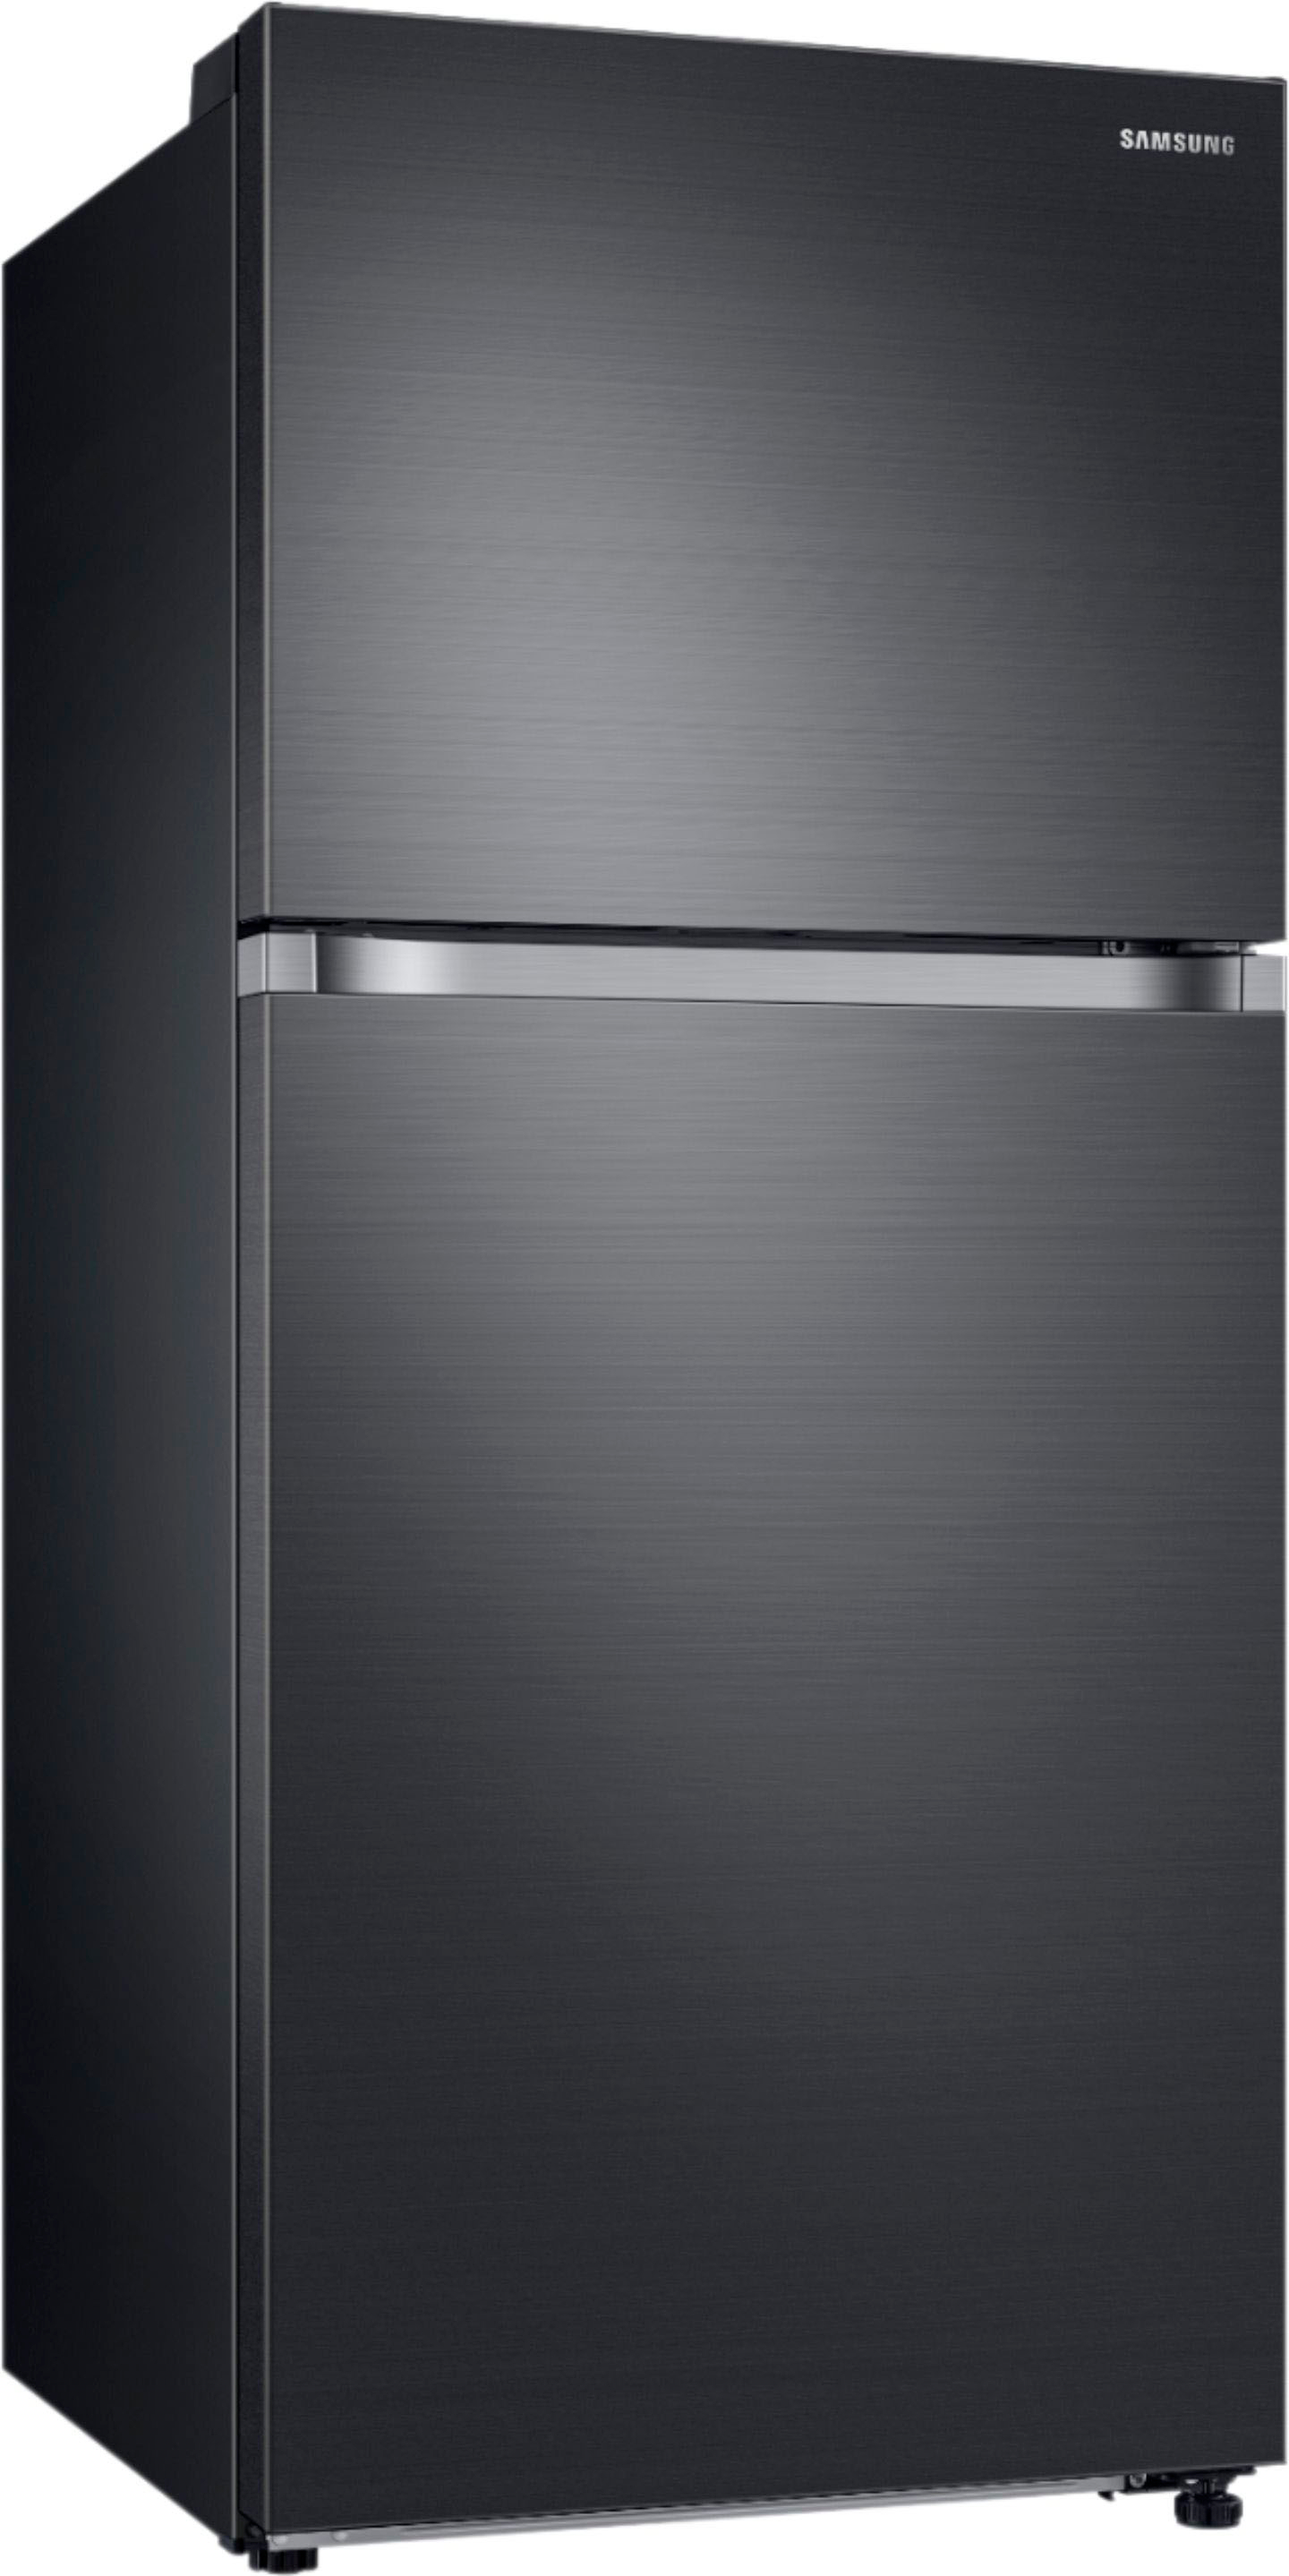 Angle View: Samsung - Geek Squad Certified Refurbished 17.6 Cu. Ft. Top-Freezer  Fingerprint Resistant Refrigerator - Black stainless steel